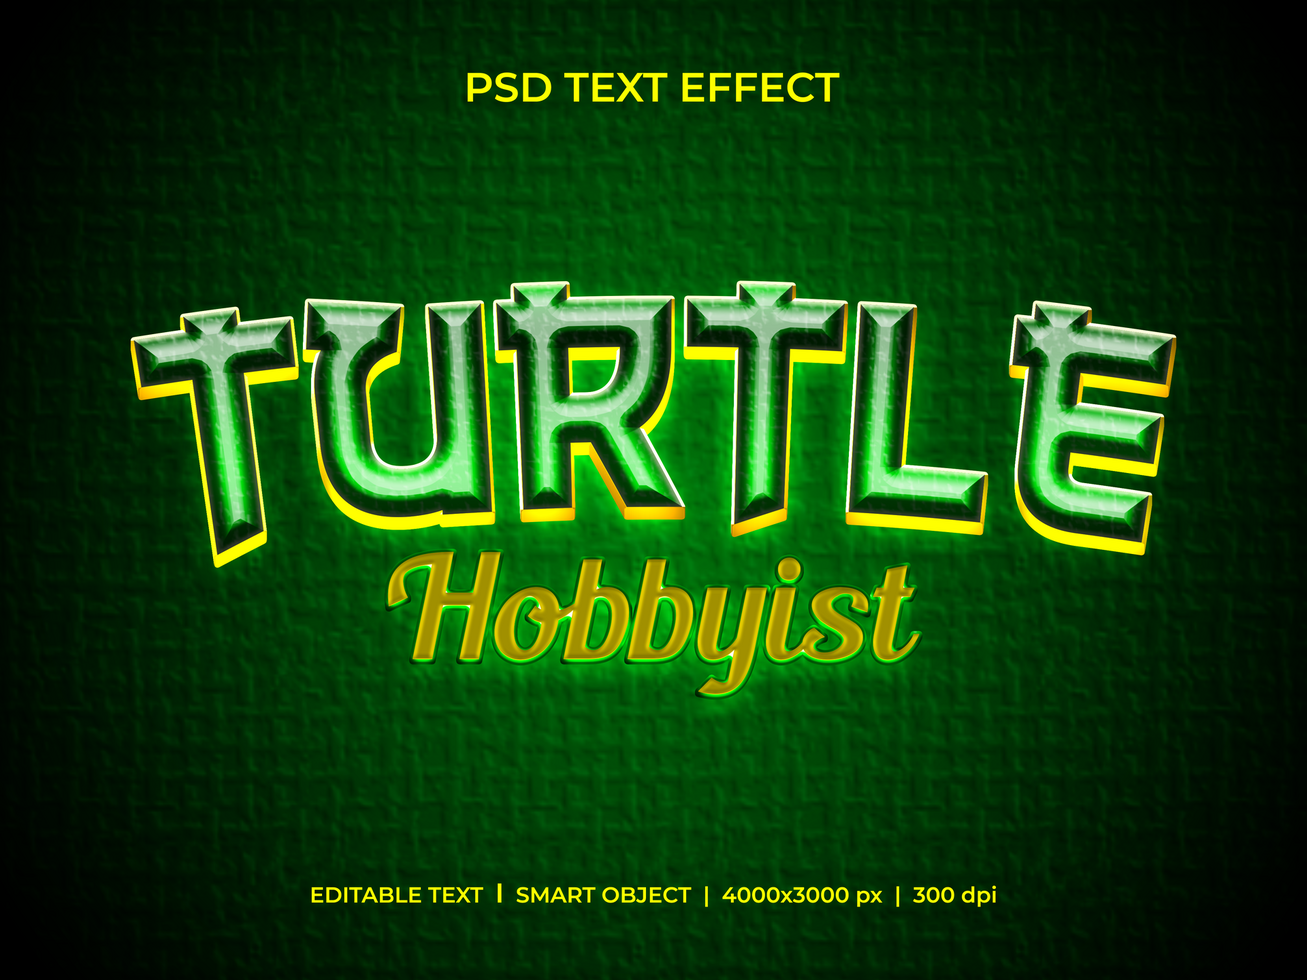 tartaruga amador texto efeito psd